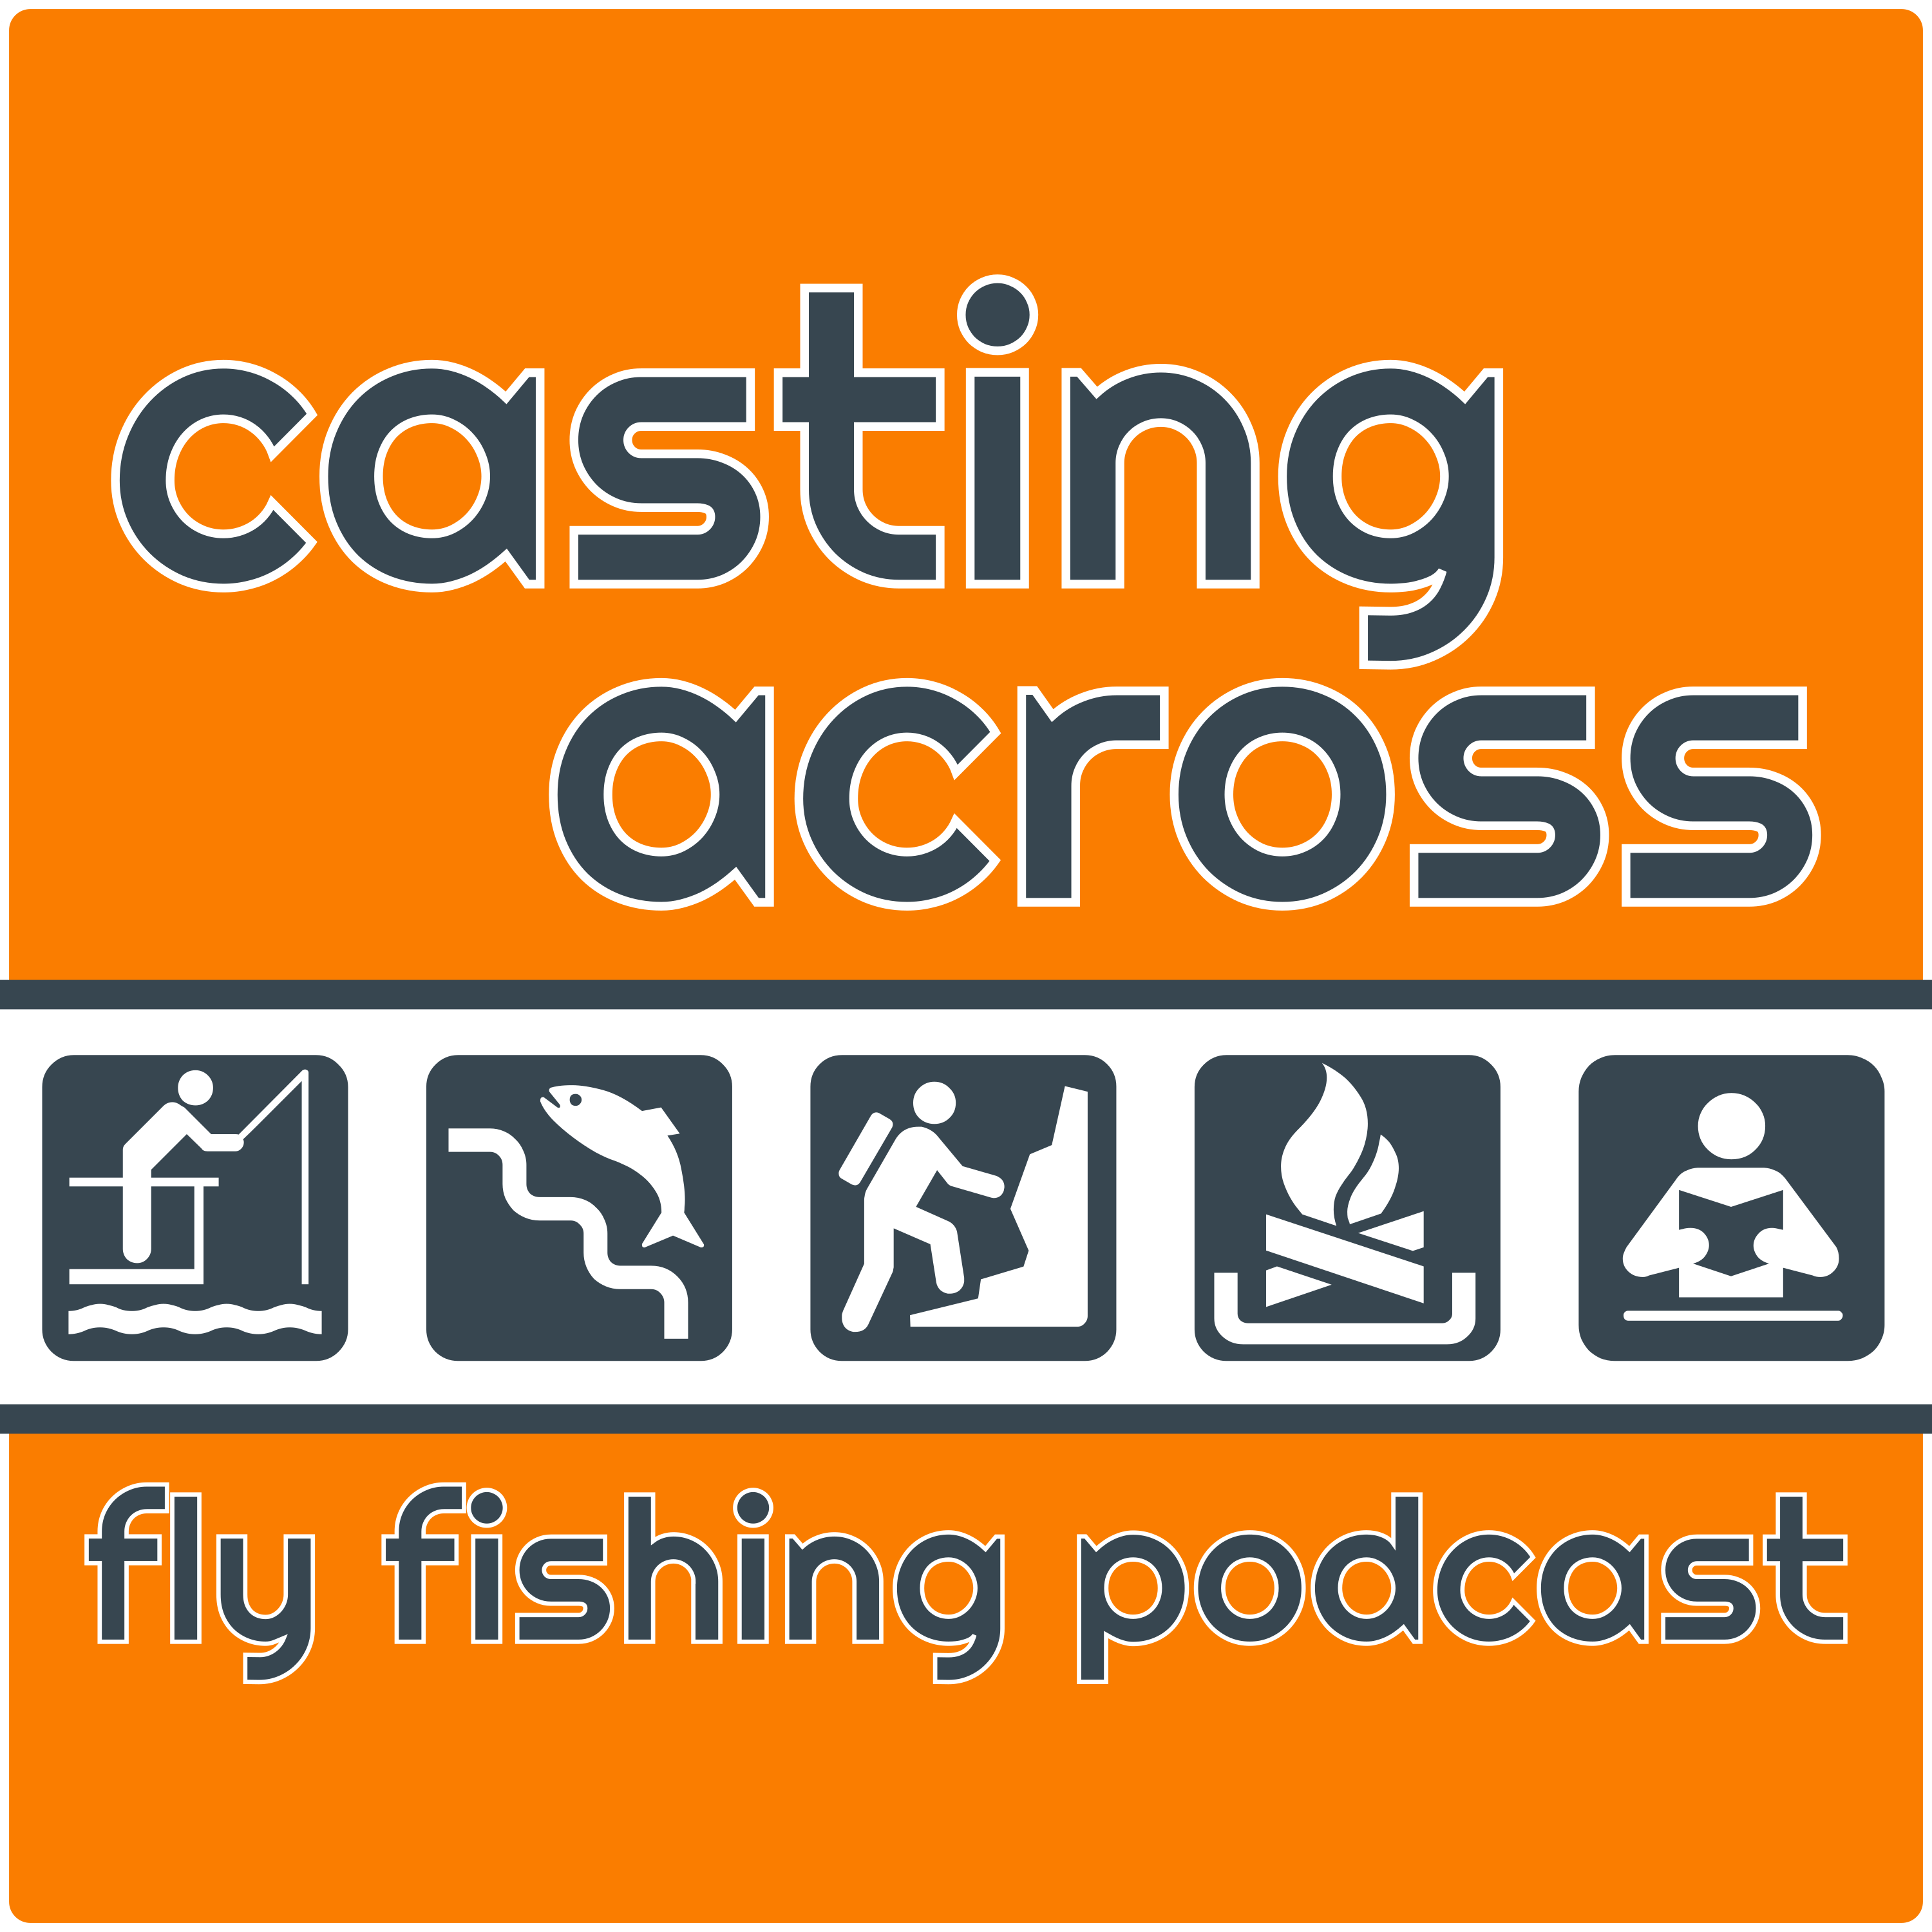 Storing Fishing Gear, part 1